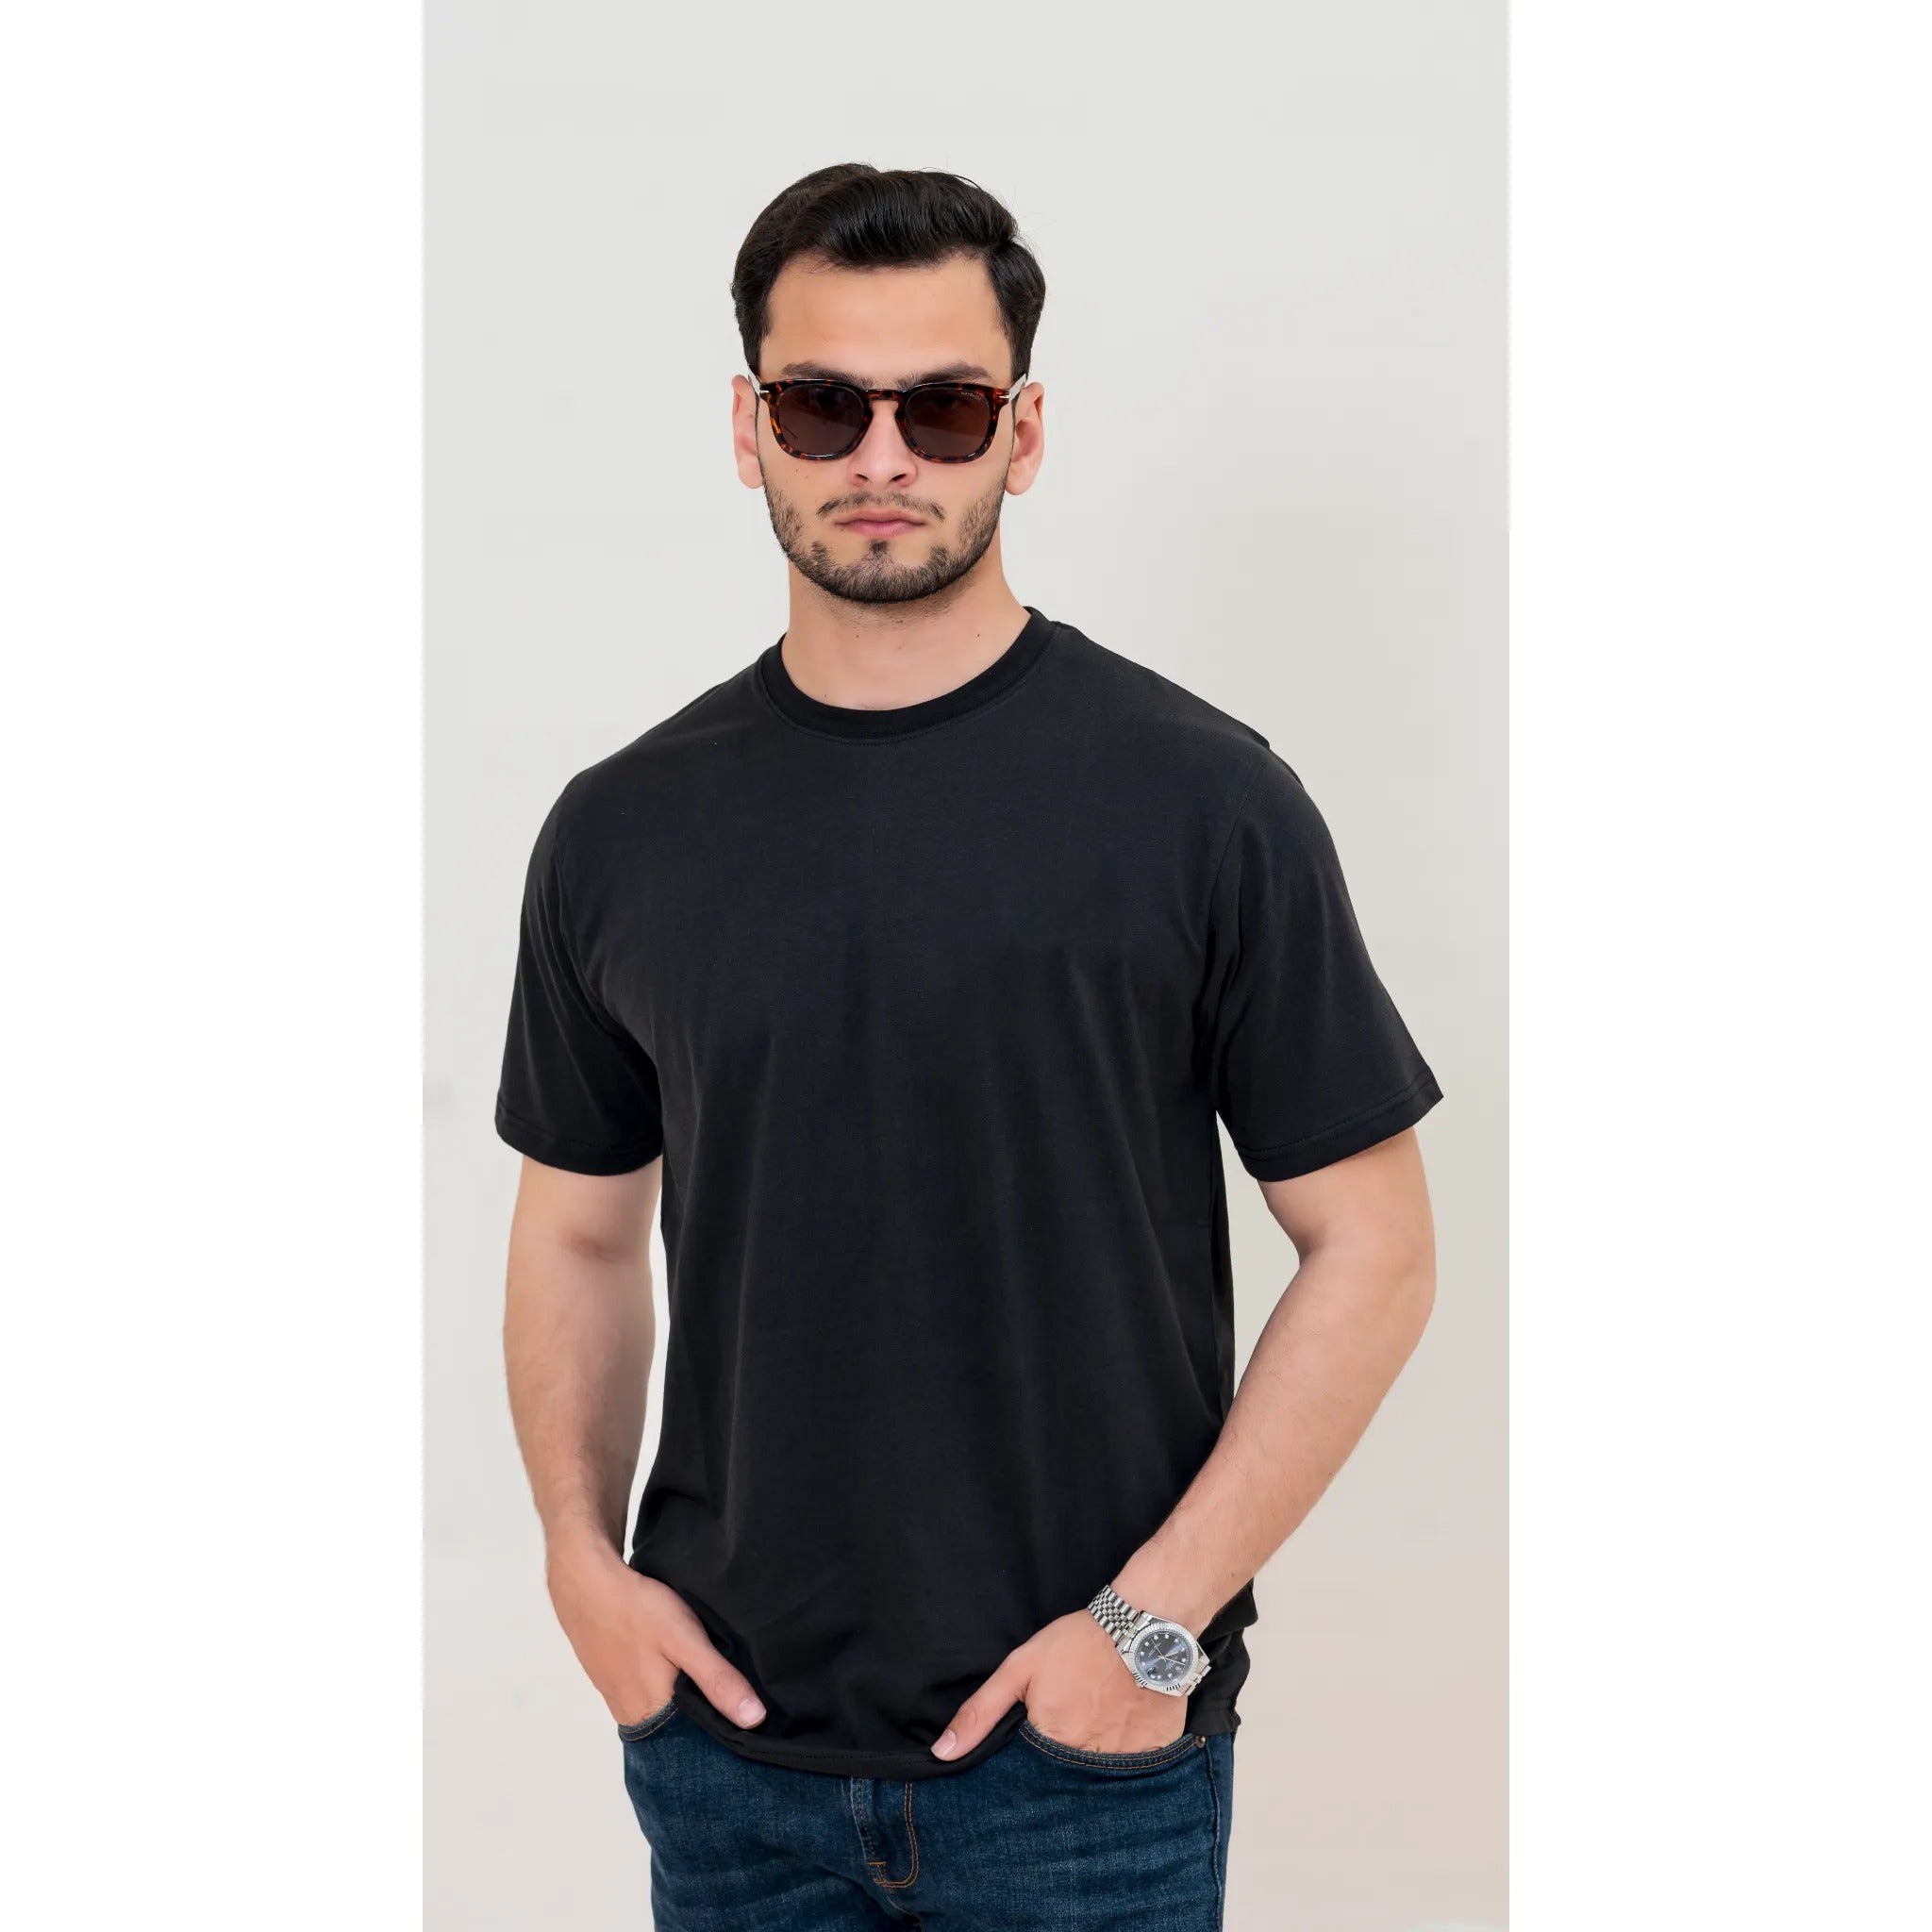 X-Fit Back Print T-Shirt For Men-2365